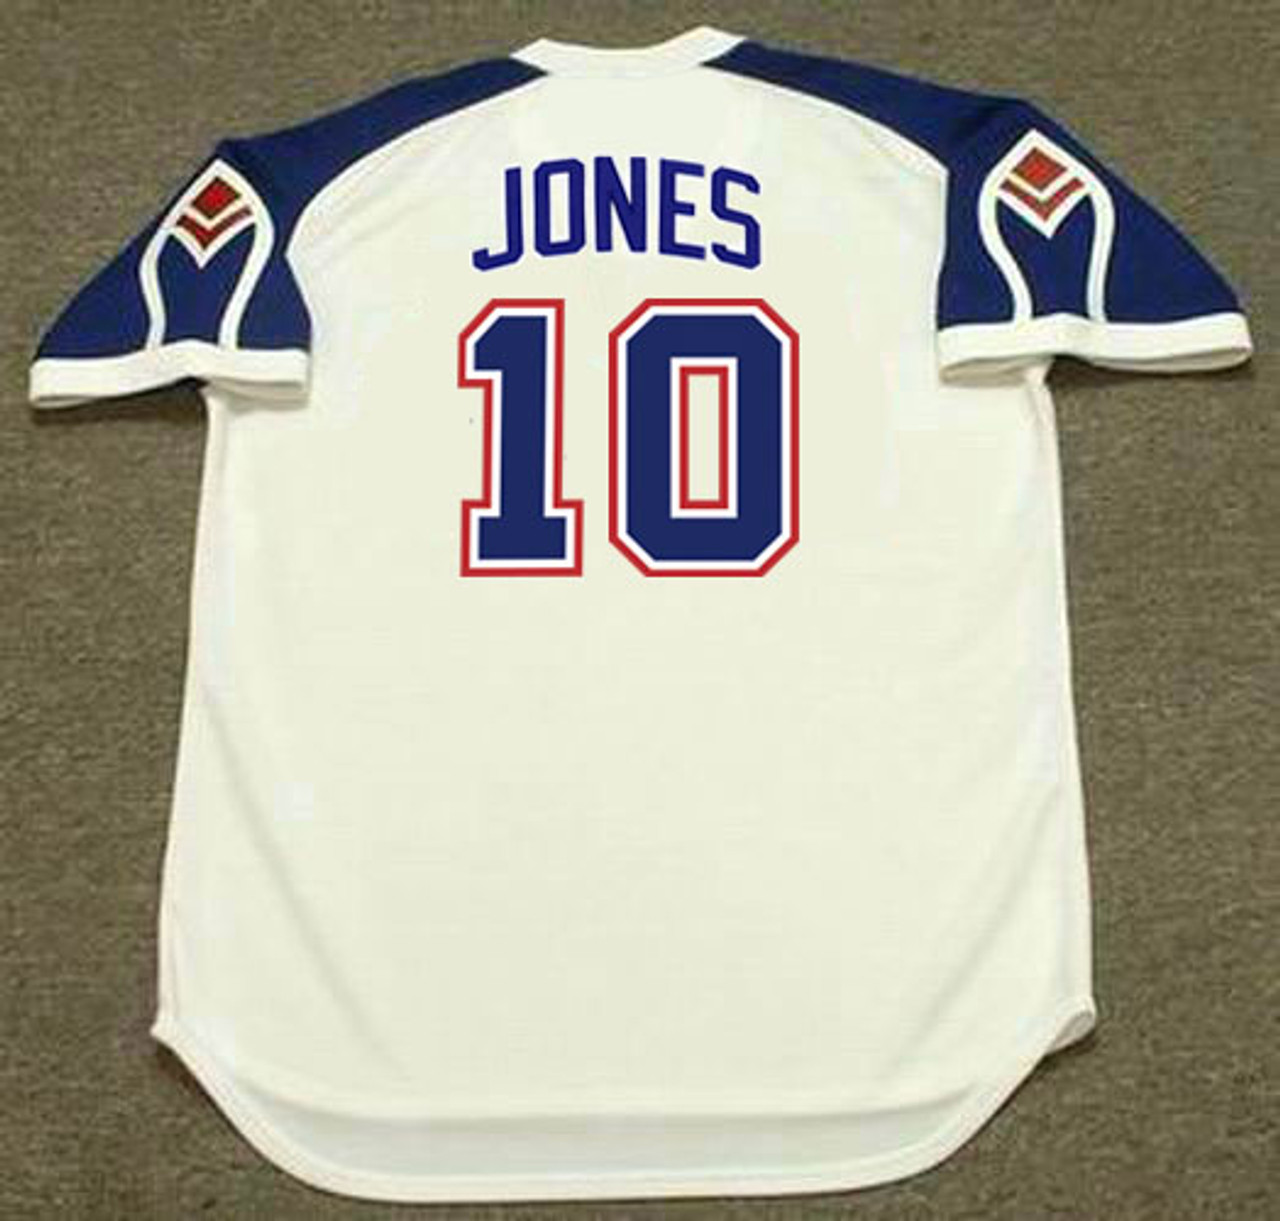 Andruw Jones Autographed Atlanta Red Custom Baseball Jersey - BAS